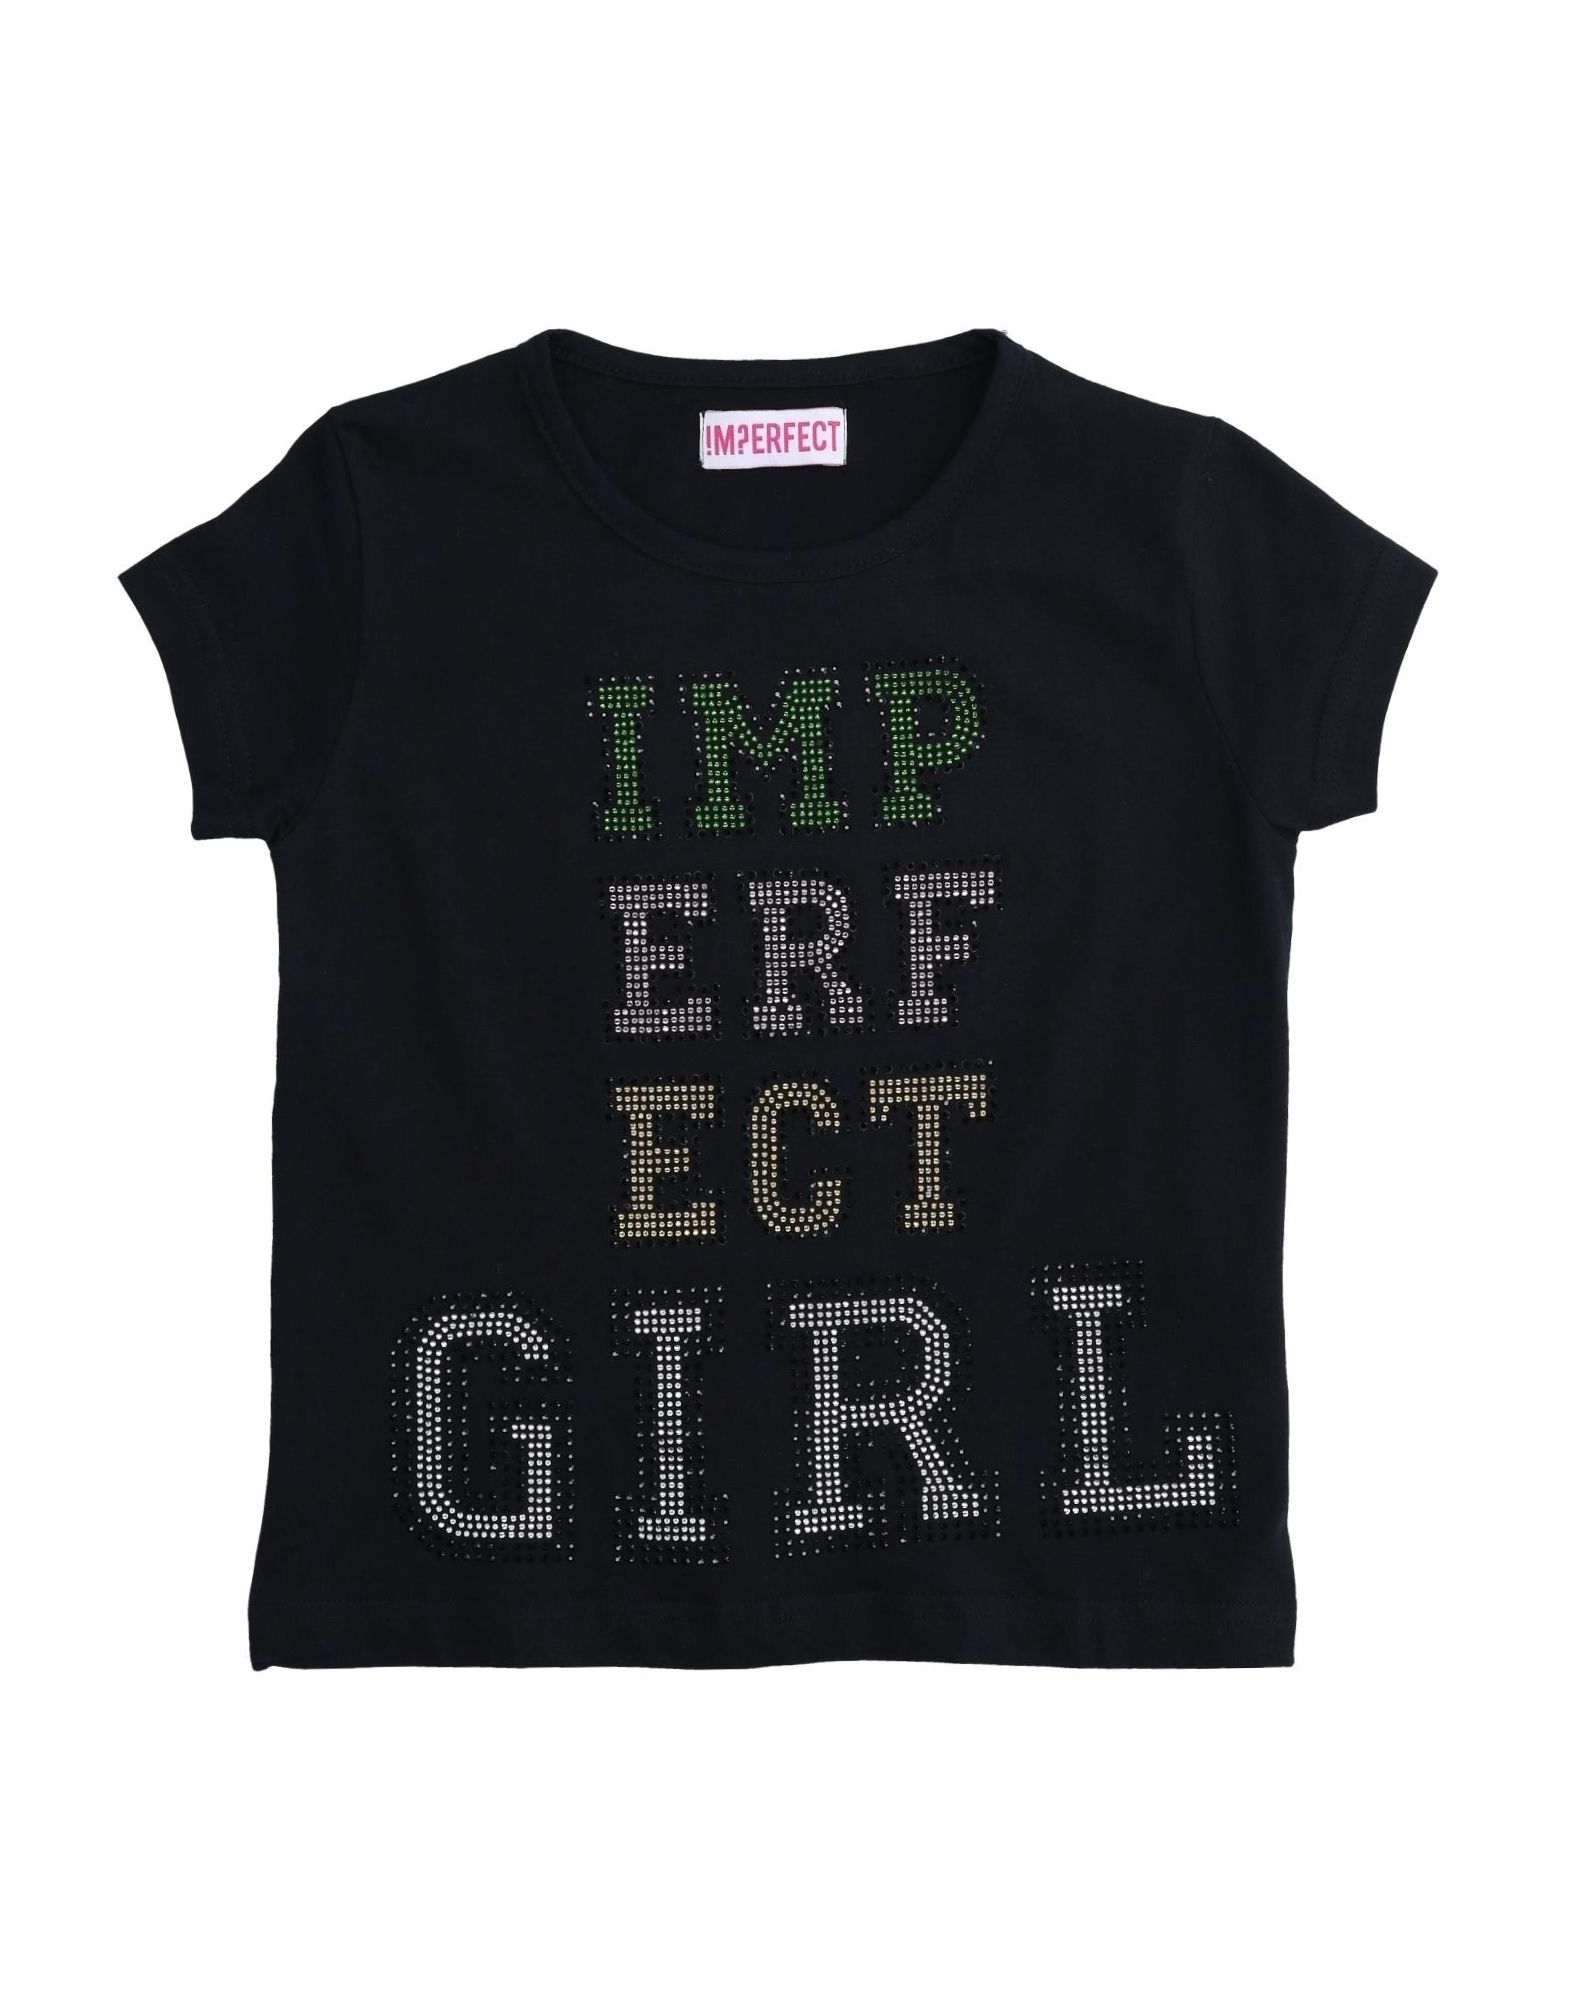 !m?erfect Kids'  Toddler Girl T-shirt Black Size 6 Cotton